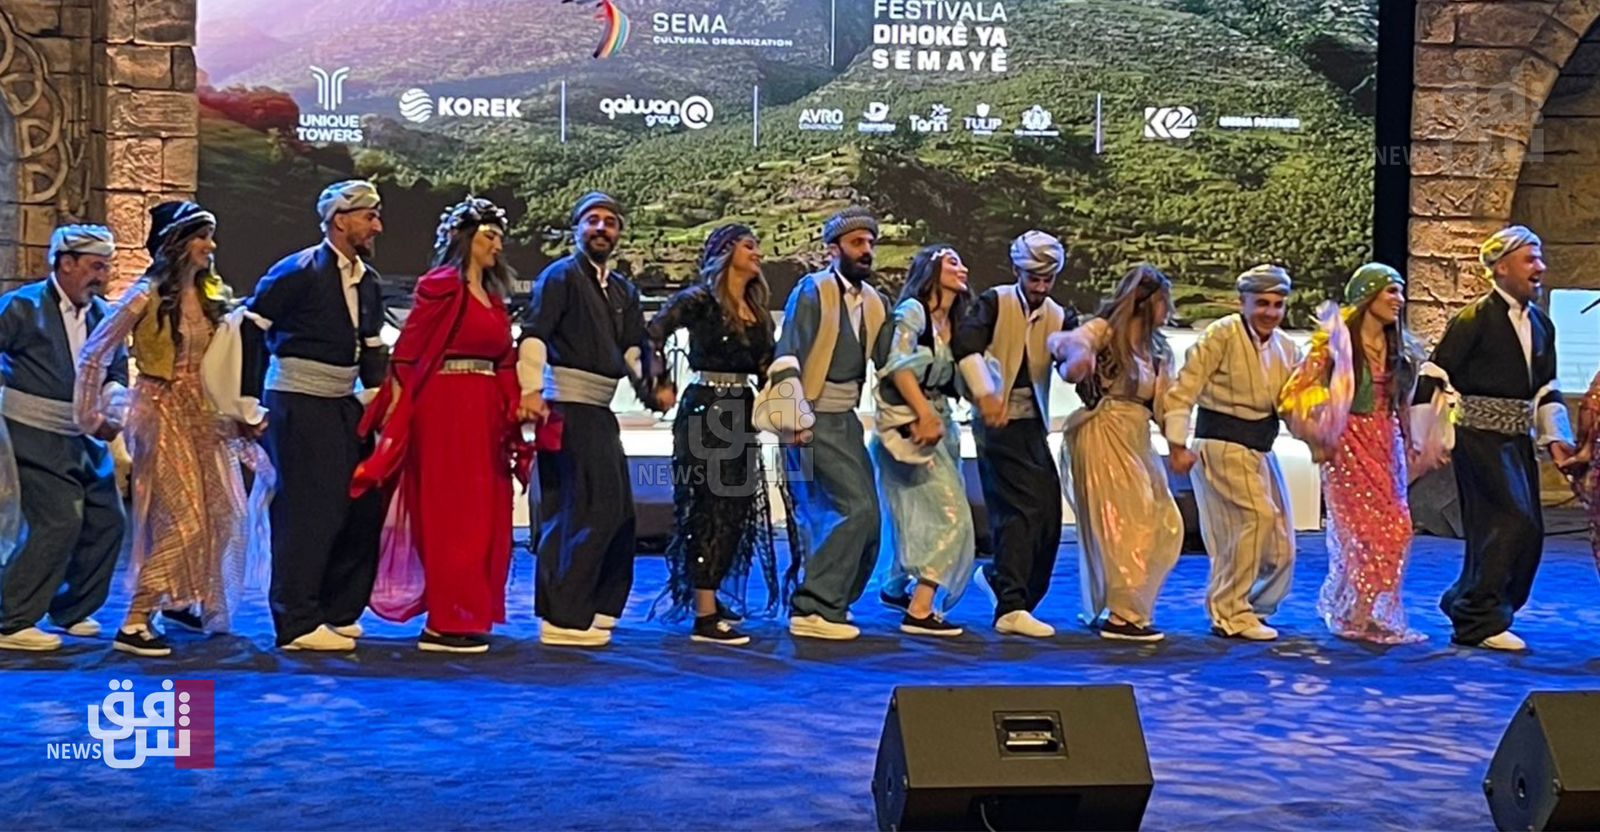 Duhok celebrates the Kurdish Dance Festival